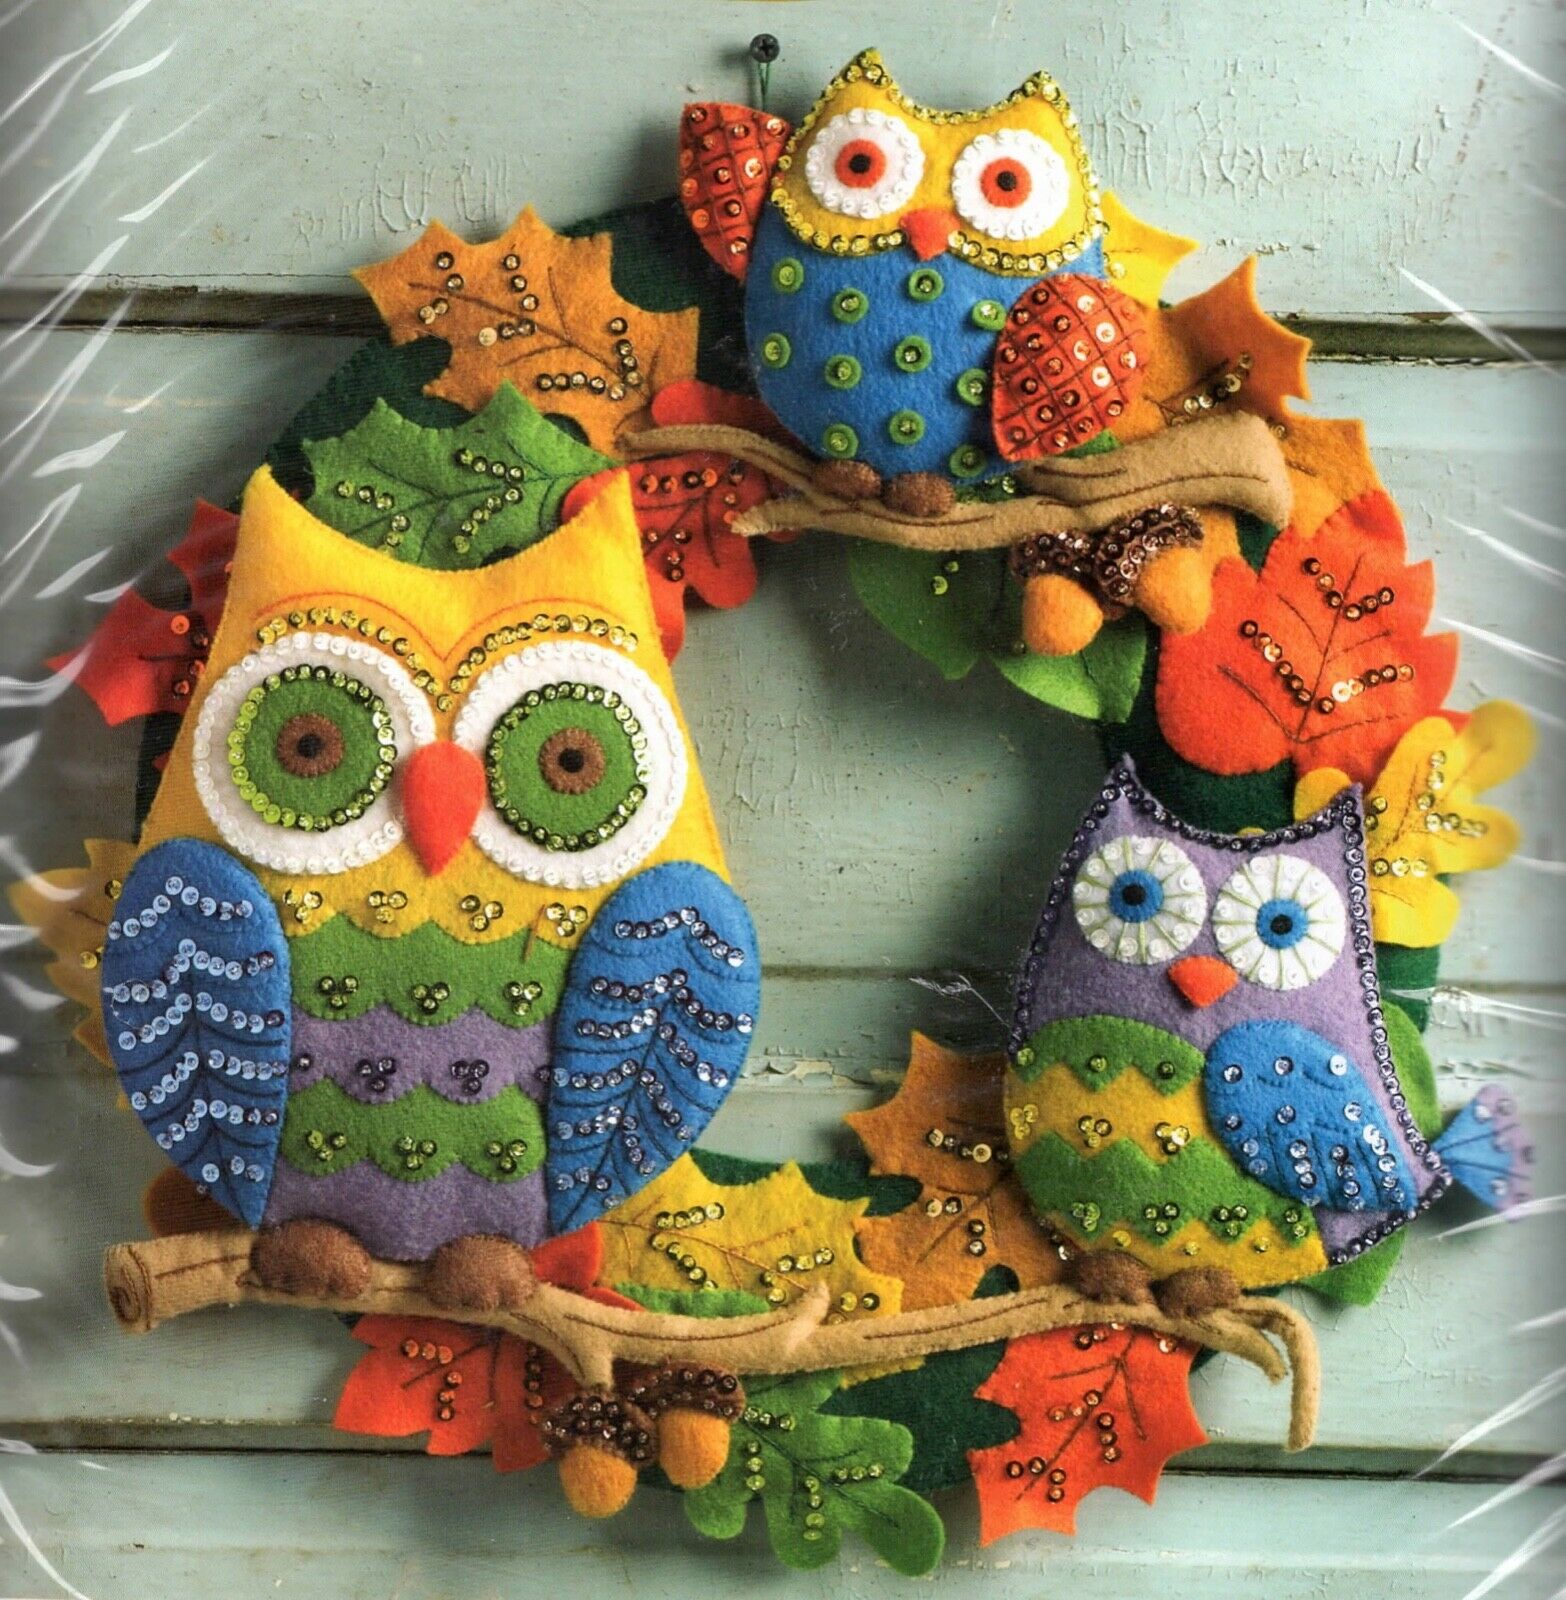 DIY Bucilla Owl Birds Halloween Thanksgiving Fall Felt Wreath Craft Kit 86562